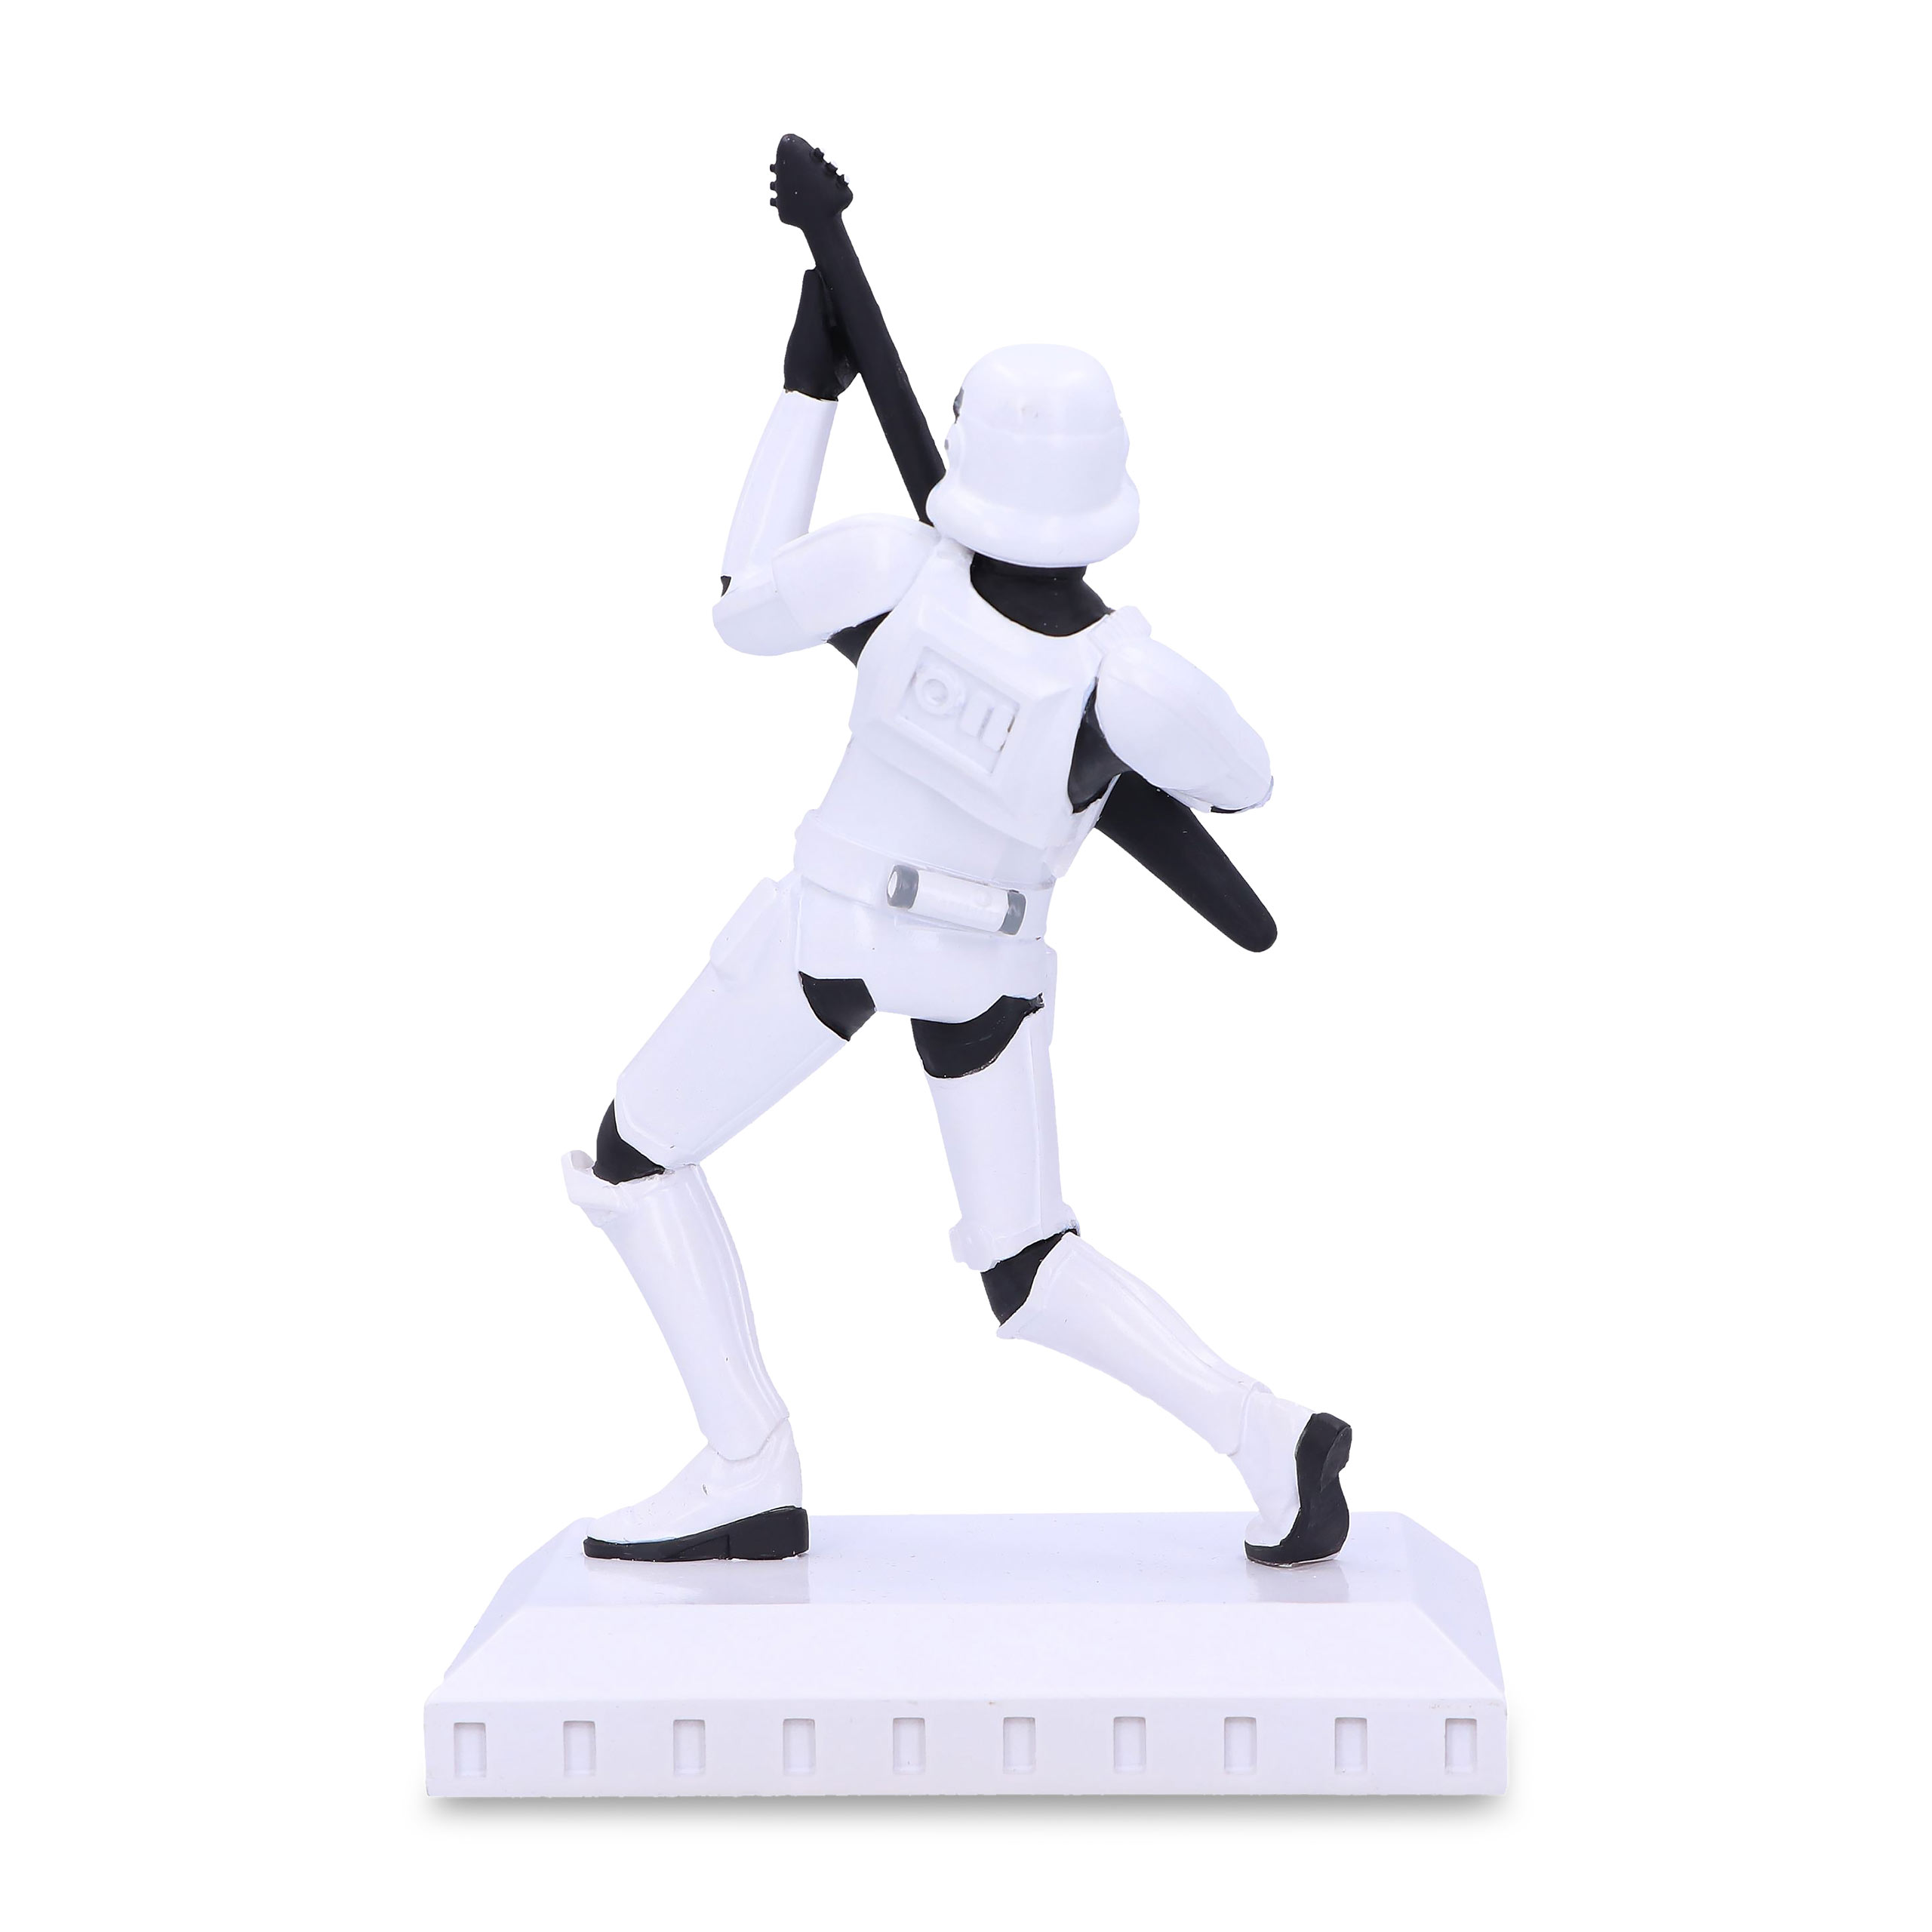 Stormtrooper Rockstar Figure - Star Wars